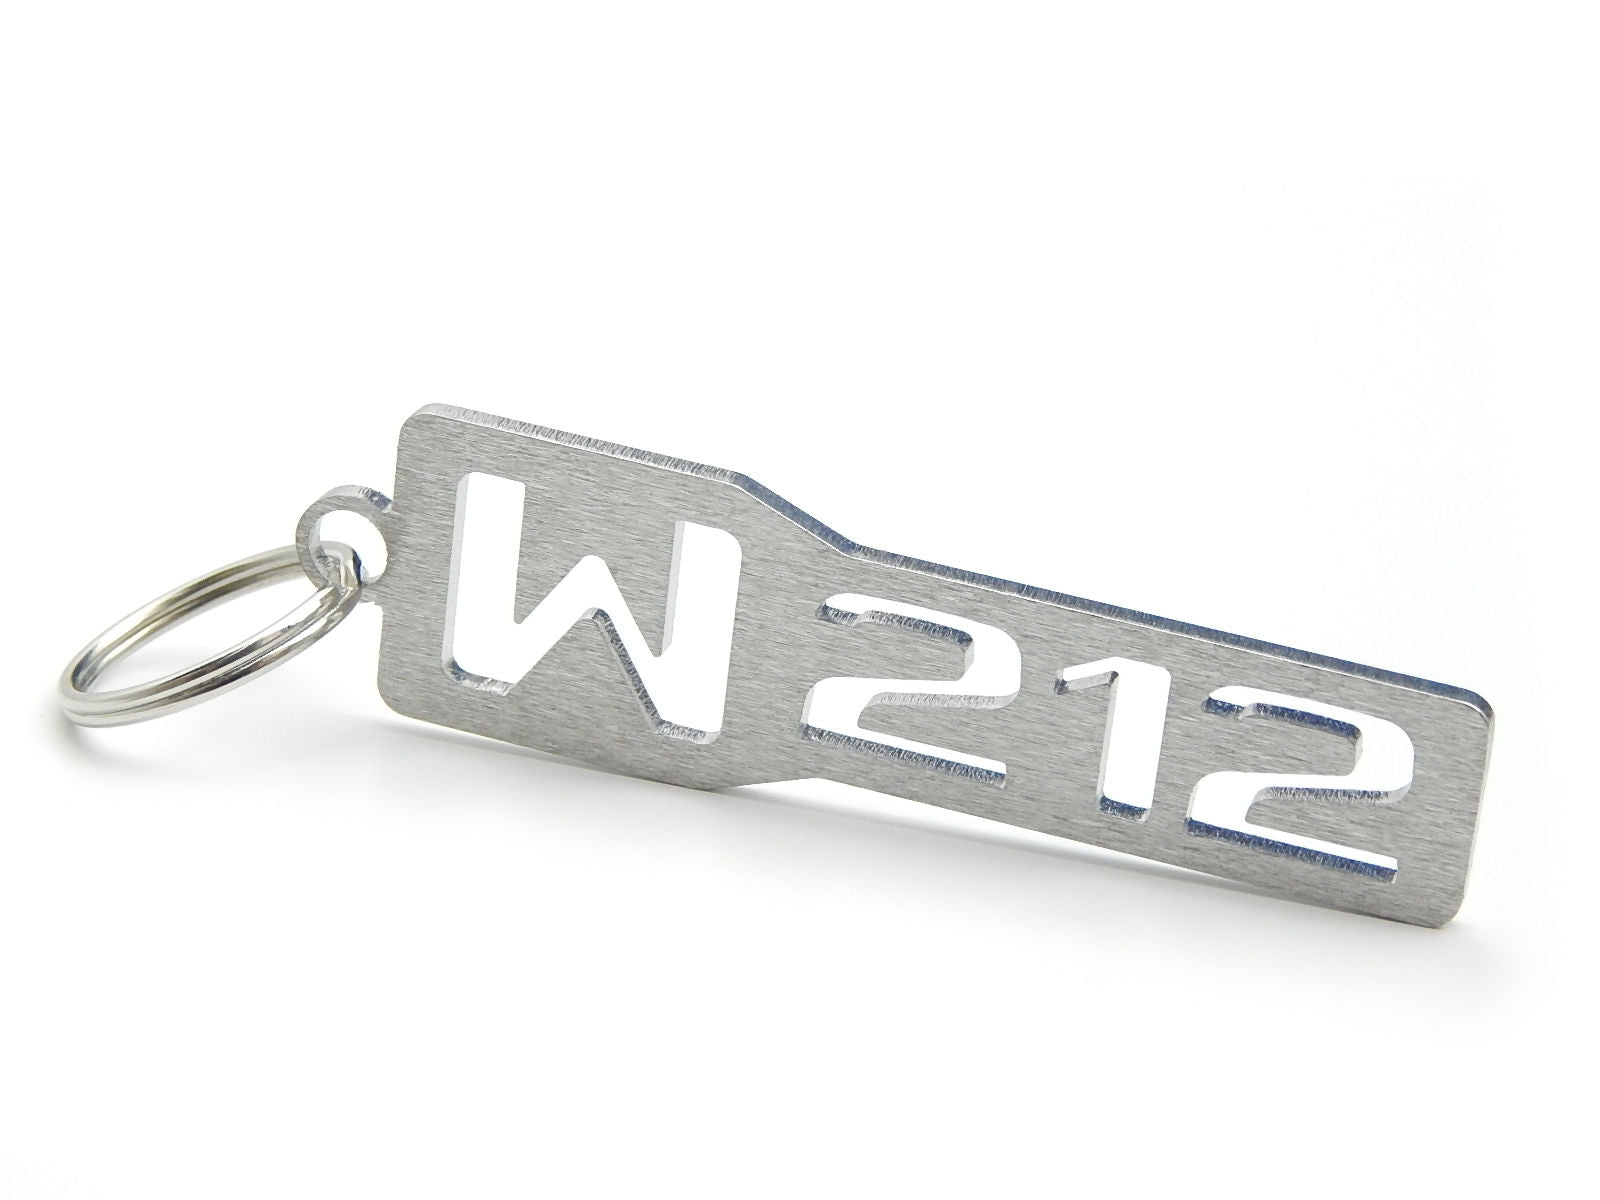 W212 DisagrEE